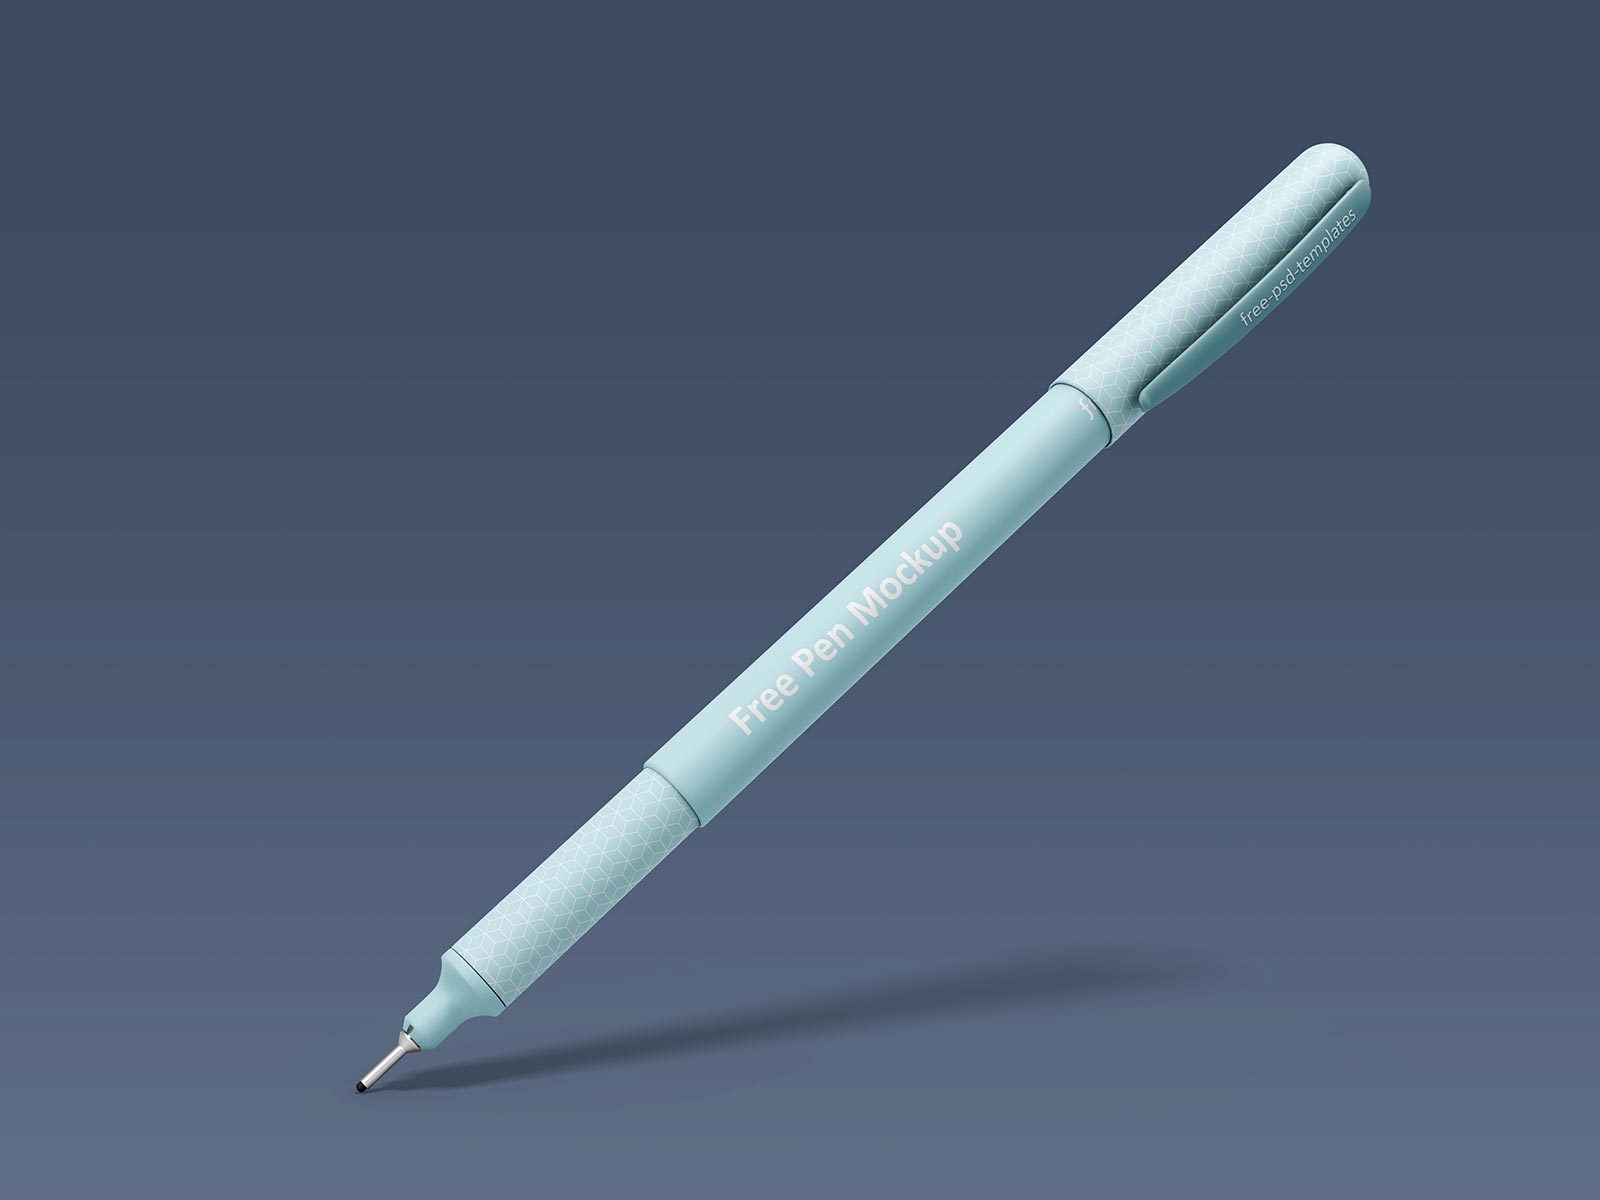 Free Micron Fineliner Pen Mockup PSD